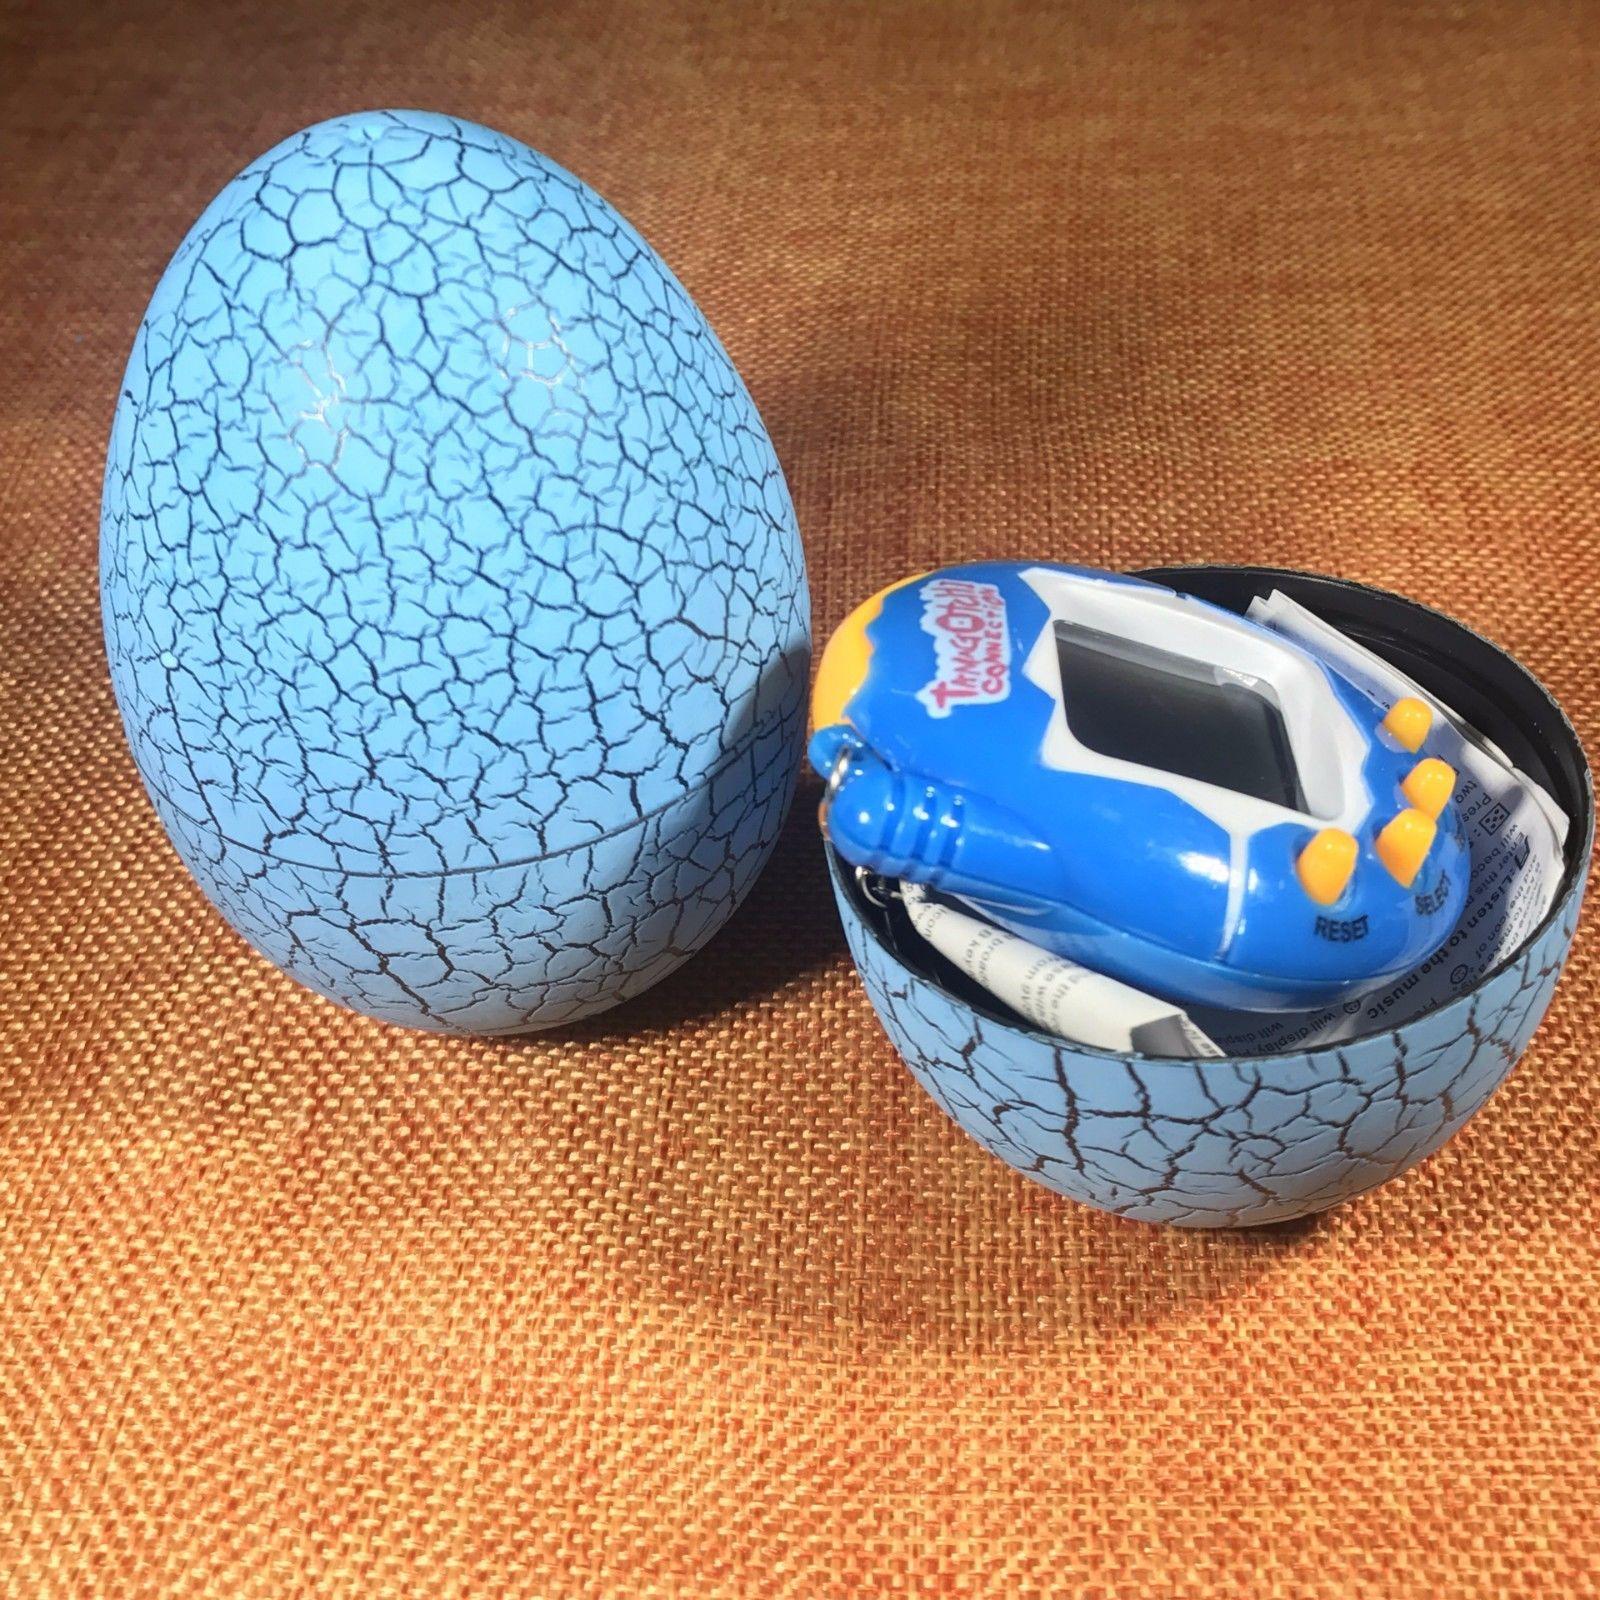 Фото 5 Игрушка электронный питомец Тамагочи в Яйце Динозавра CG Eggshell Game Blue